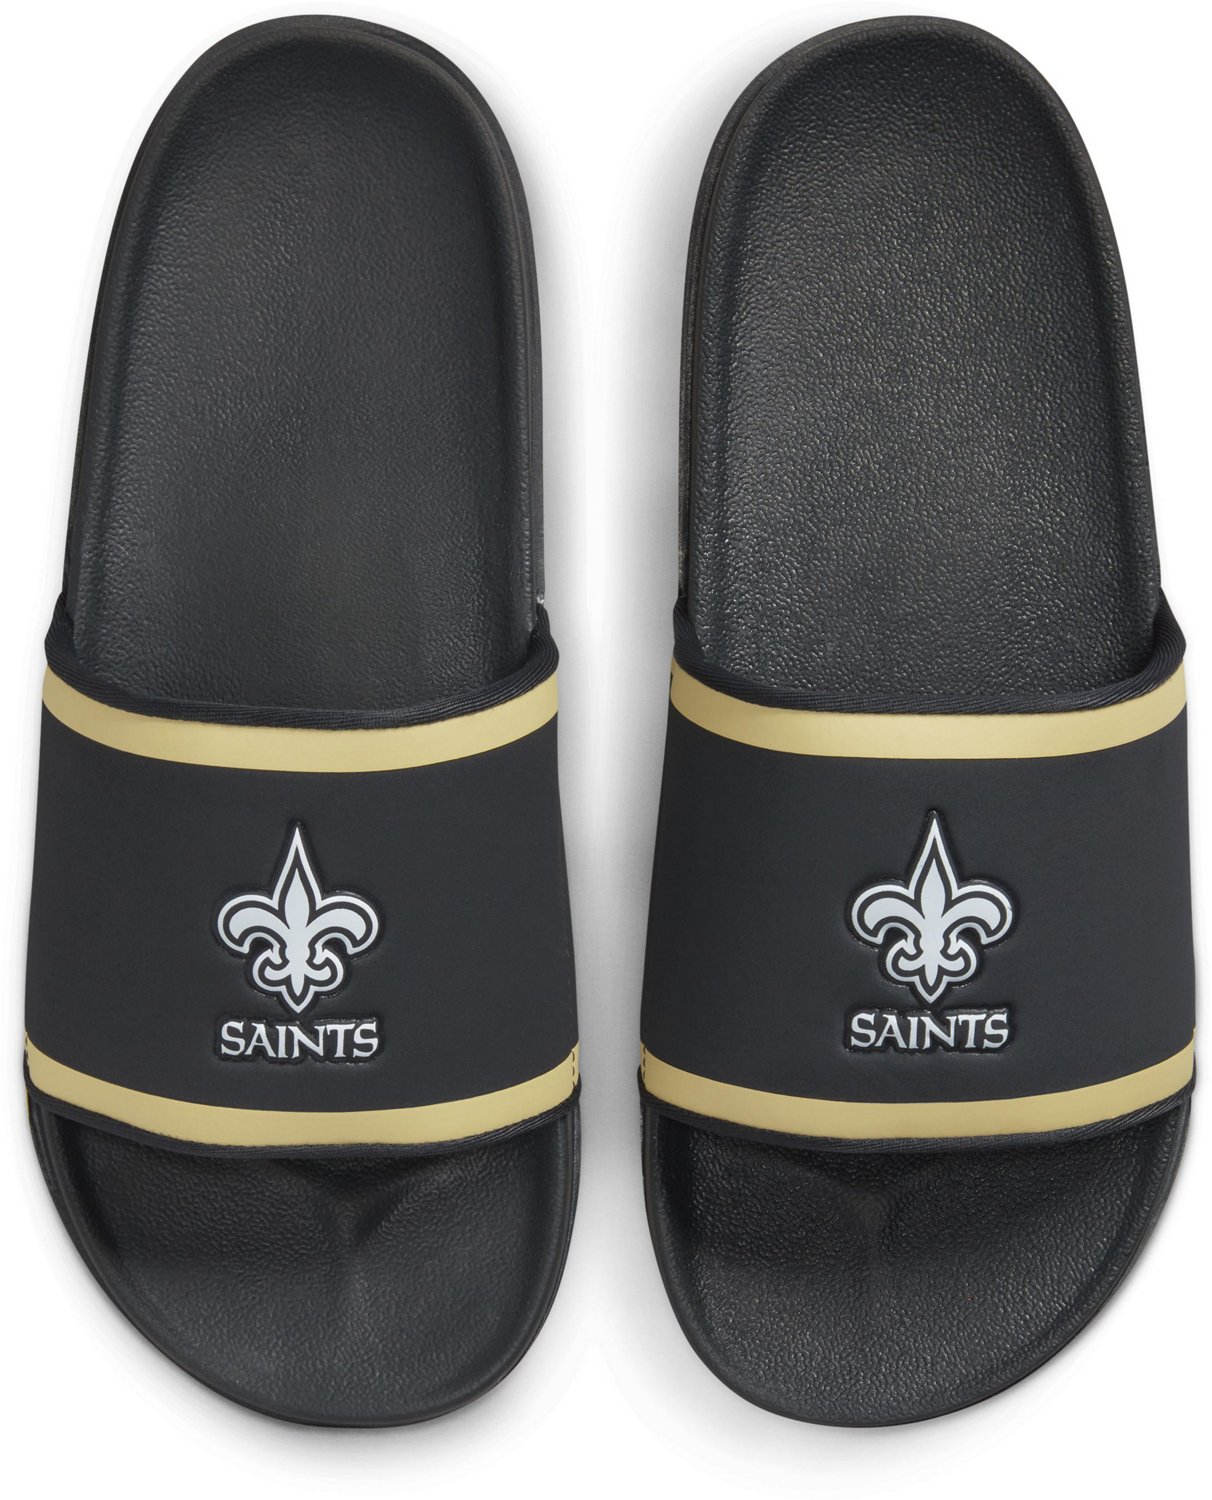 New Orleans Saints Nike Gucci Air Force Shoes 